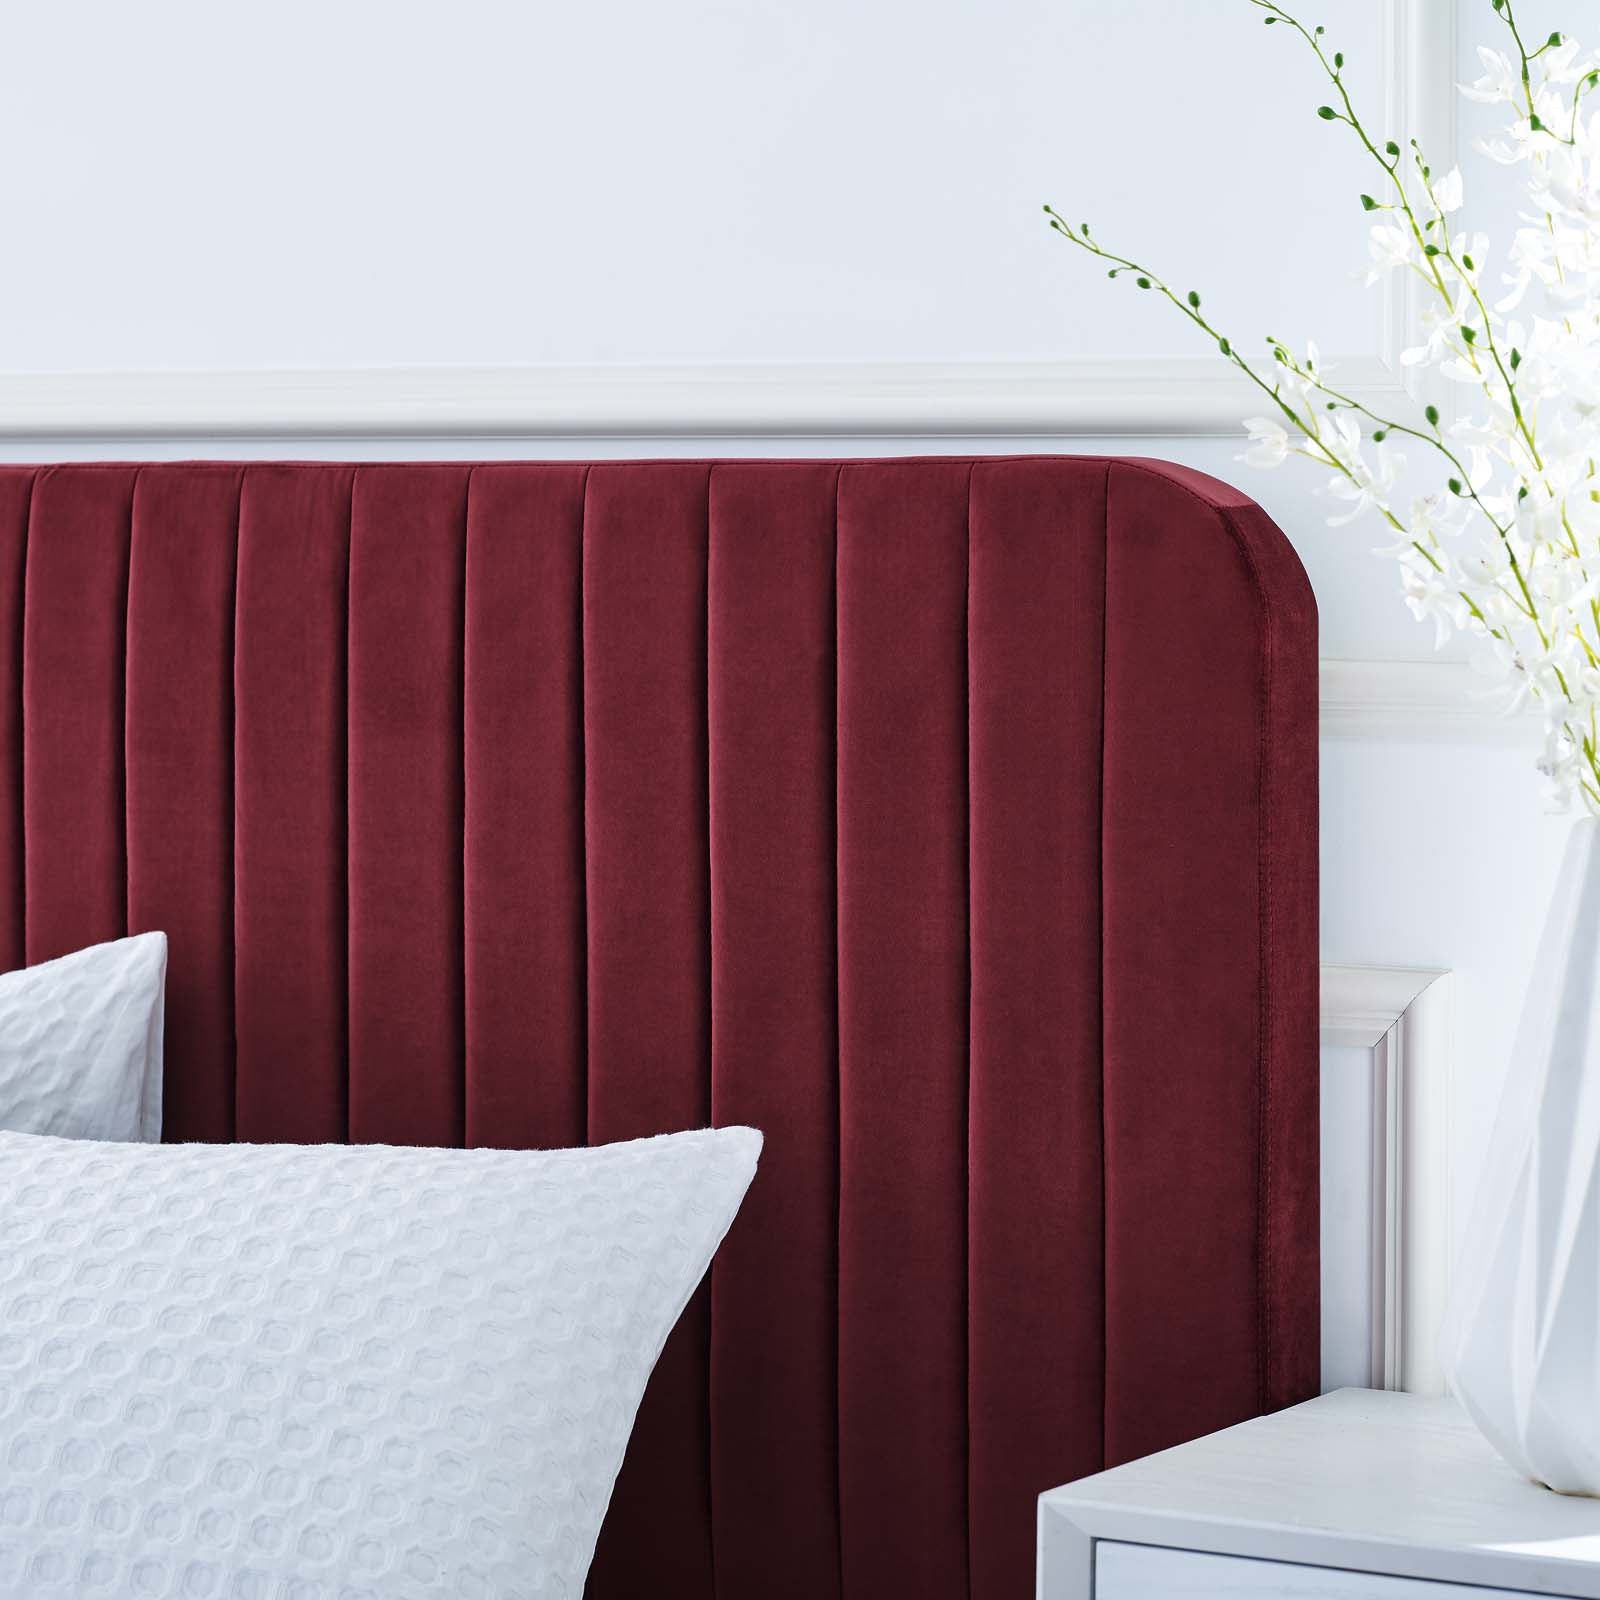 Celine Channel Tufted Performance Velvet Platform Bed - East Shore Modern Home Furnishings